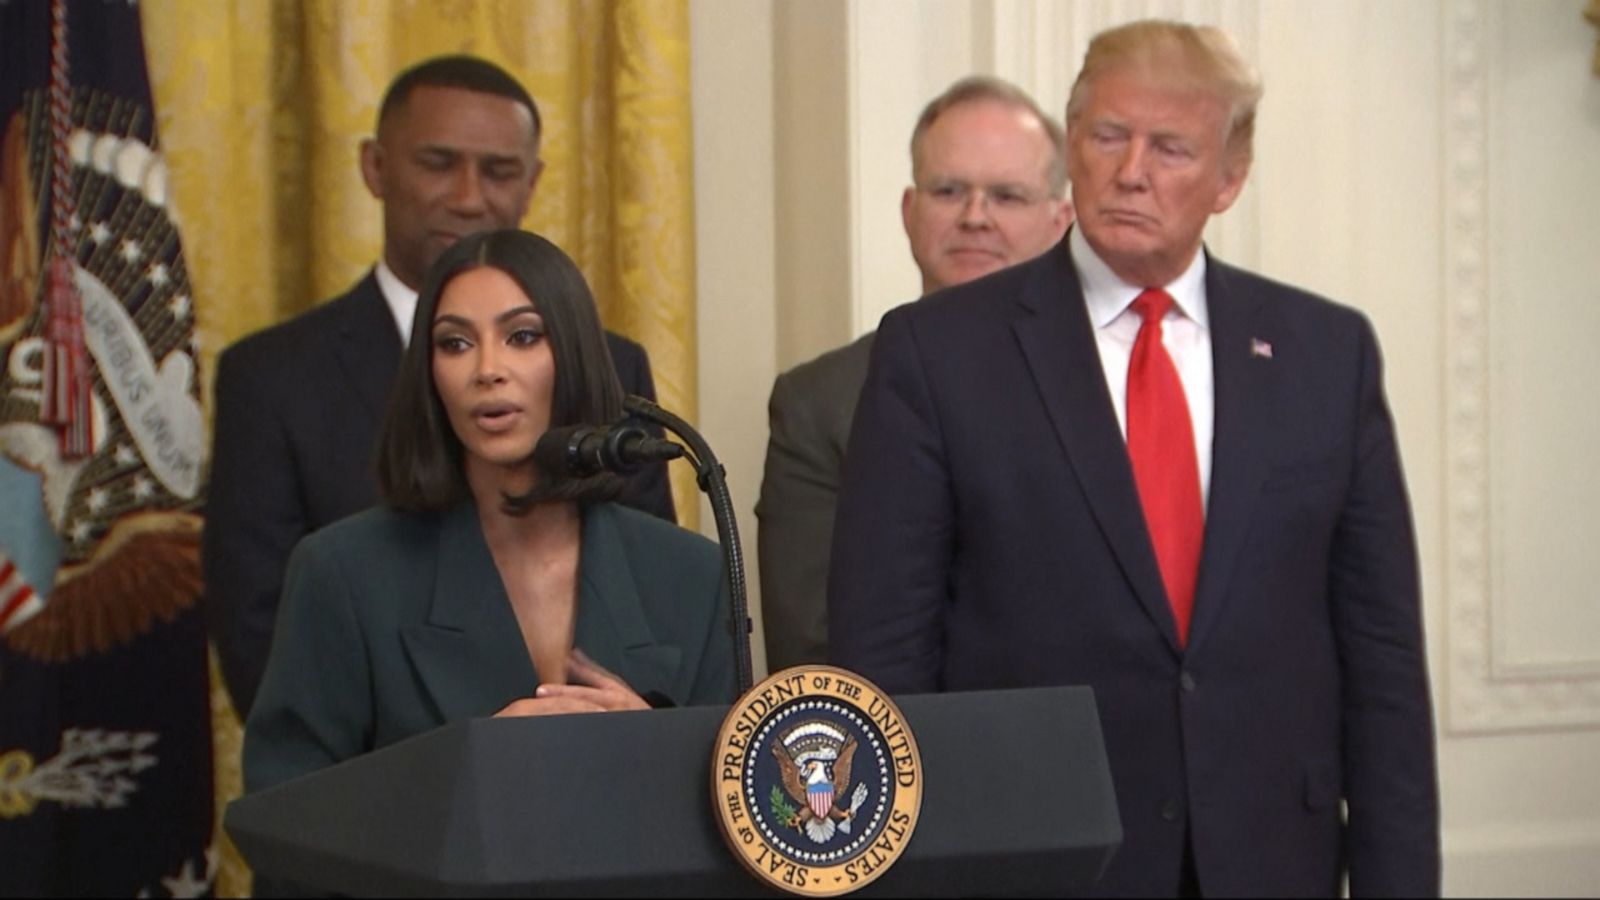 Kim Kardashian to discuss criminal justice reform on